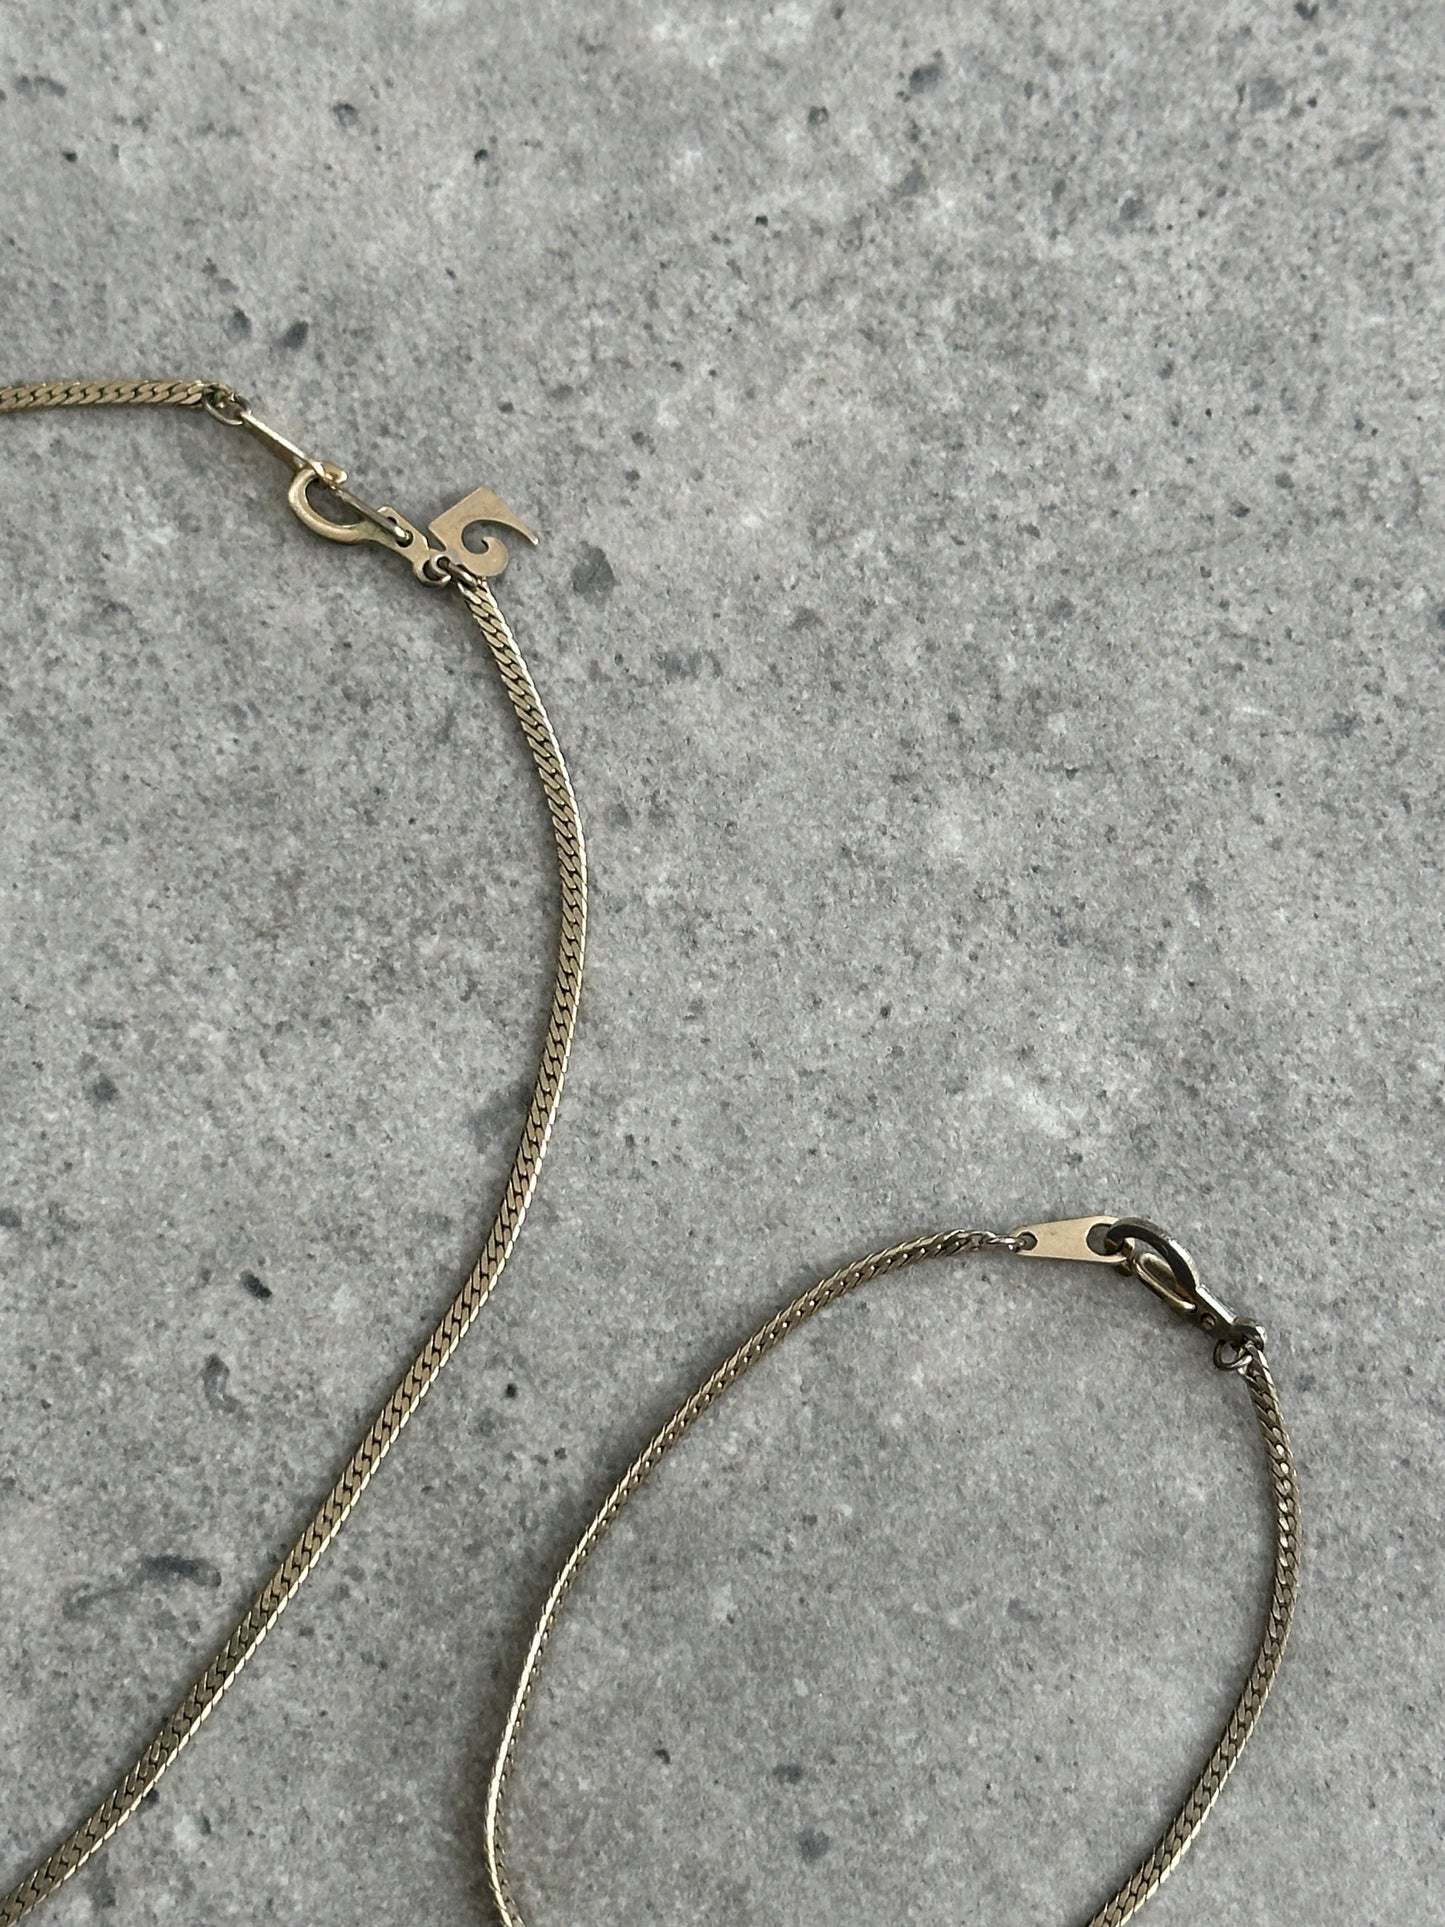 Pierre Cardin Gold Plated Necklace & Bracelet Chain Set